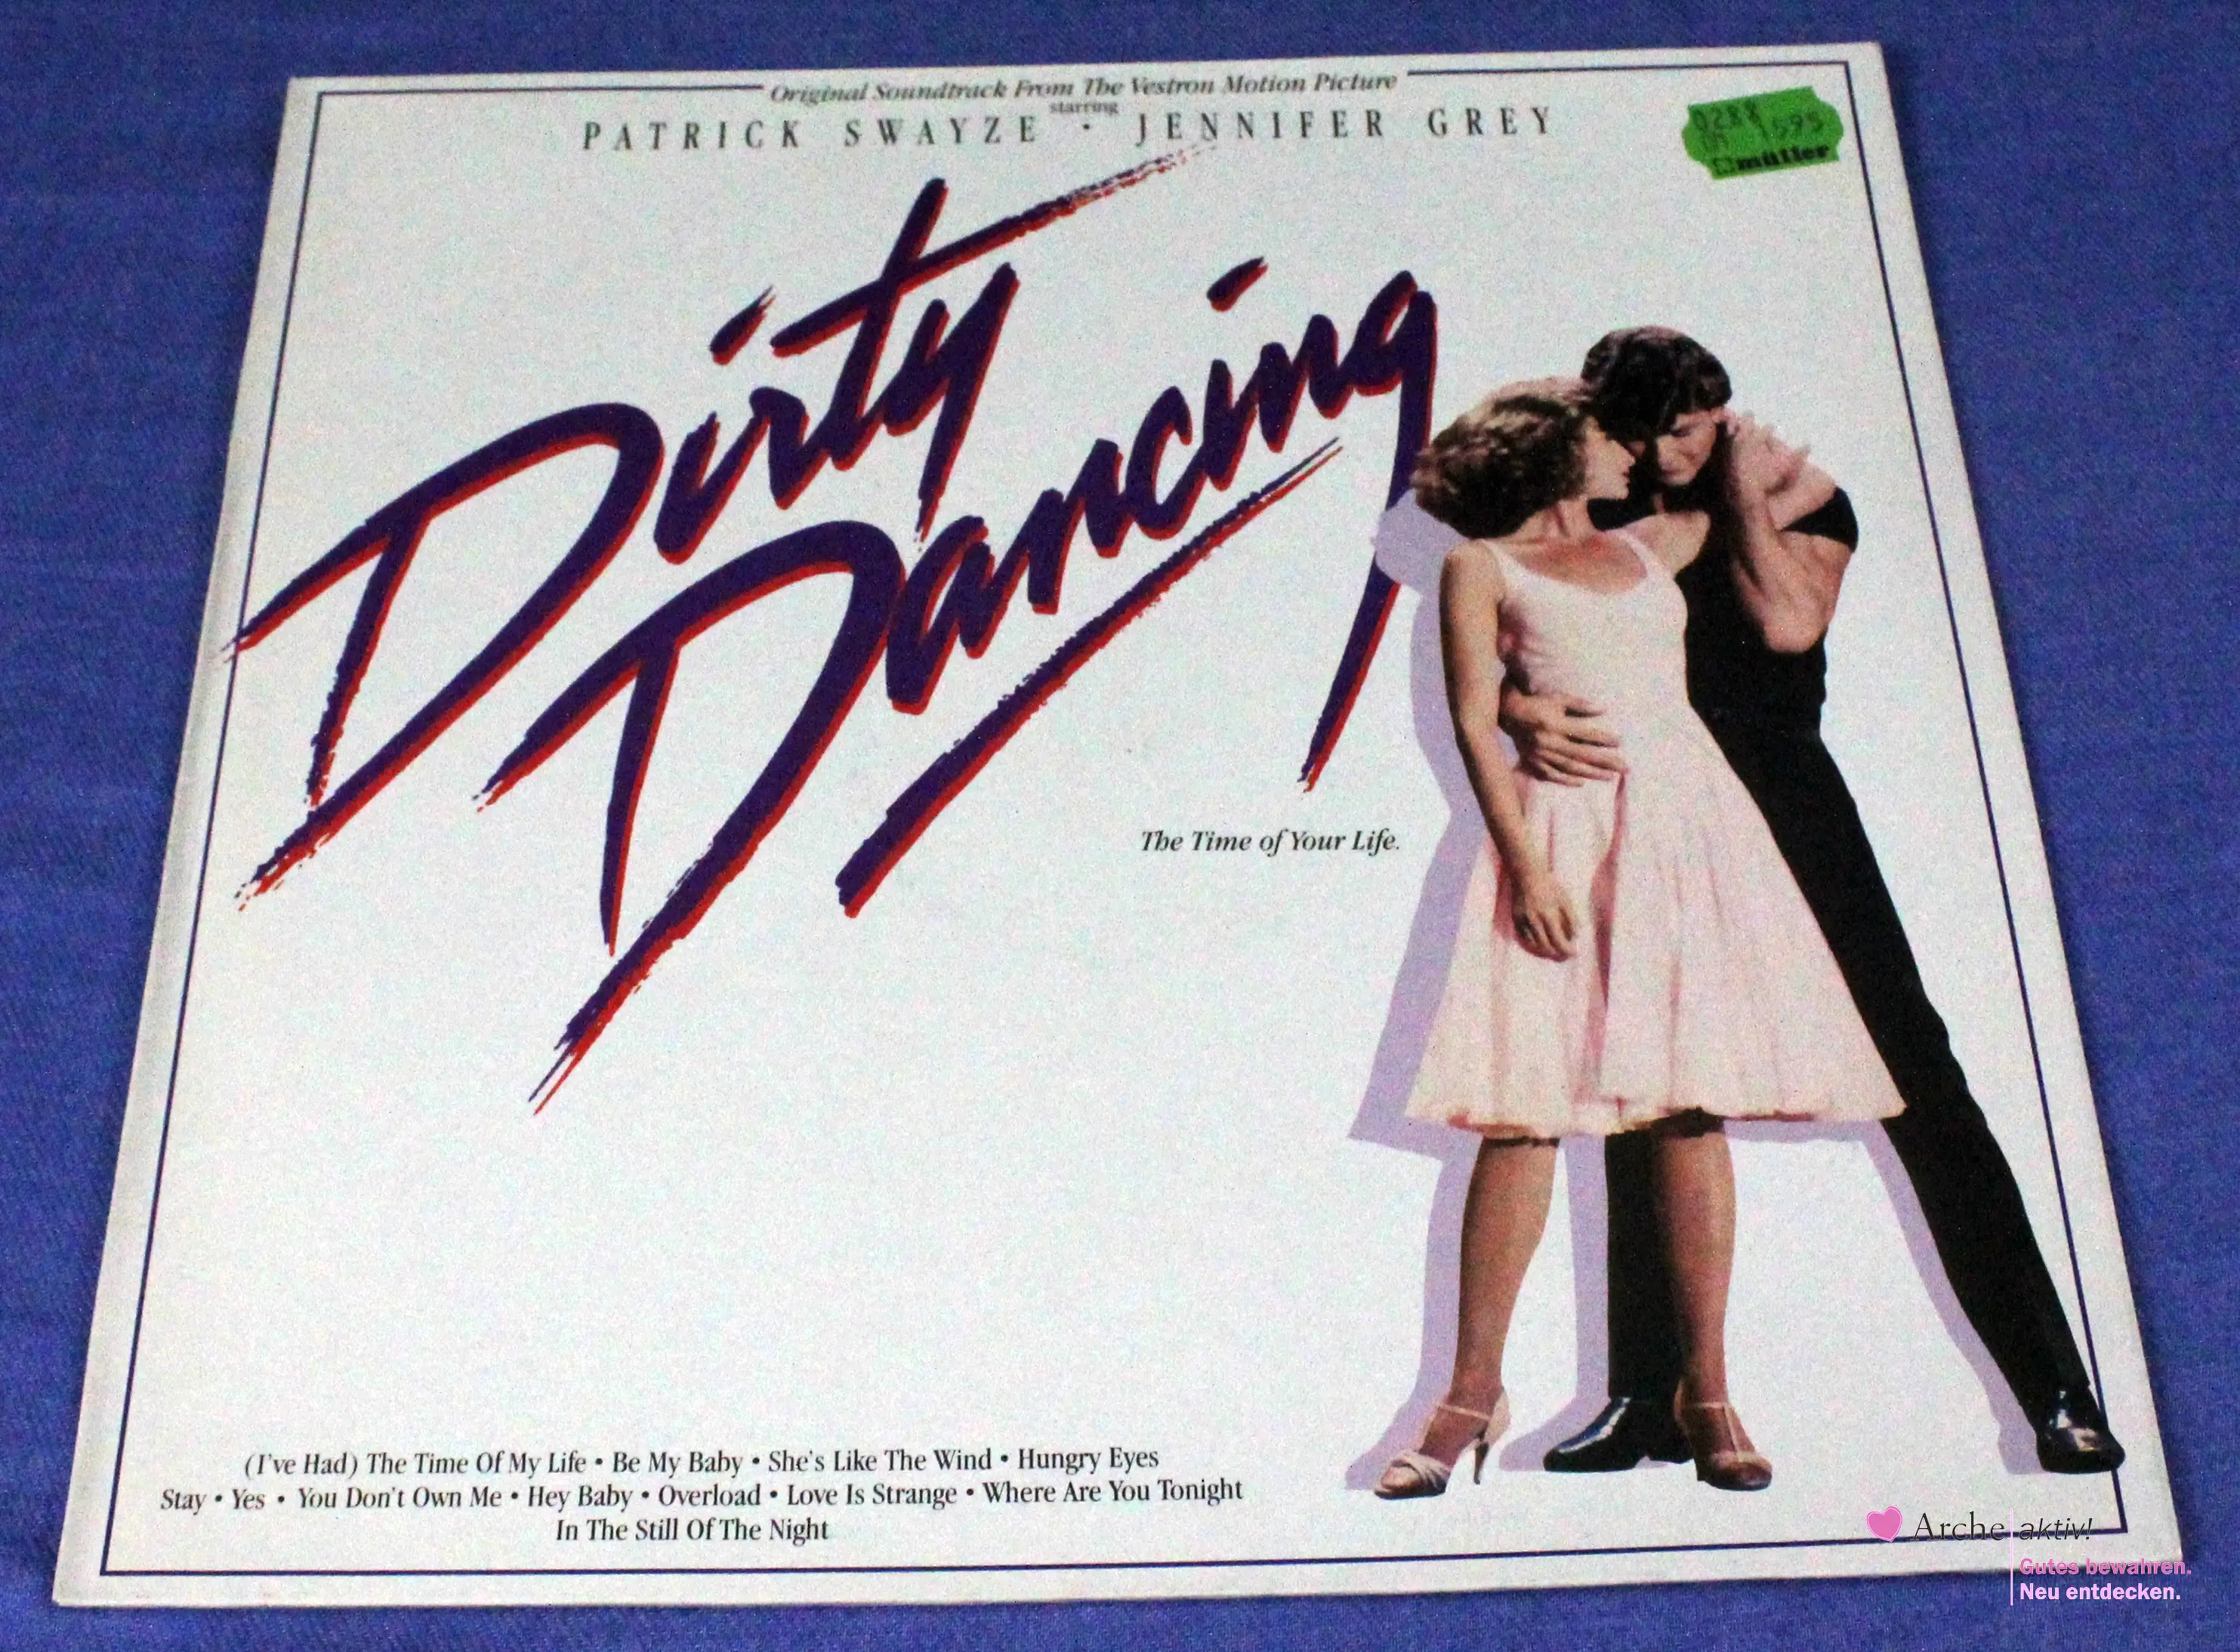 Dirty Dancing - Original Soundtrack From The Vestron Motion Picture (Vinyl) LP, gebraucht